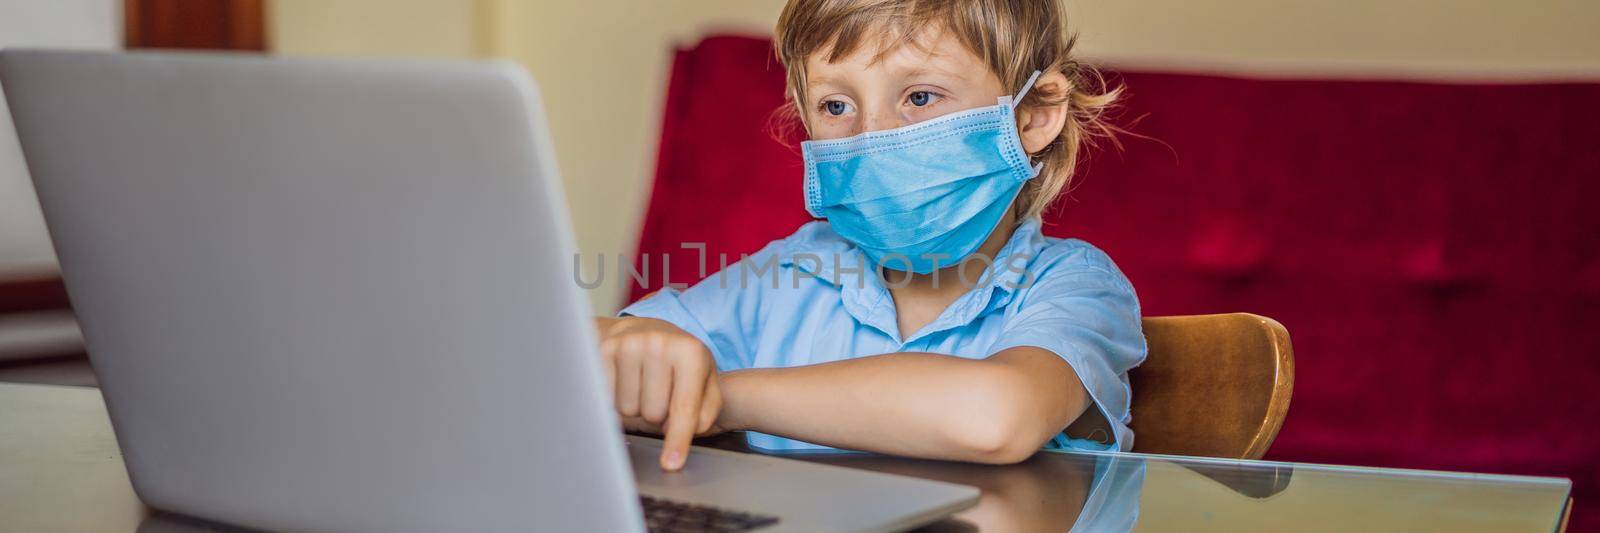 Boy studying online at home using laptop in medical masks to protect against coronovirus. Studying during quarantine. Global pandemic covid19 virus BANNER, LONG FORMAT by galitskaya